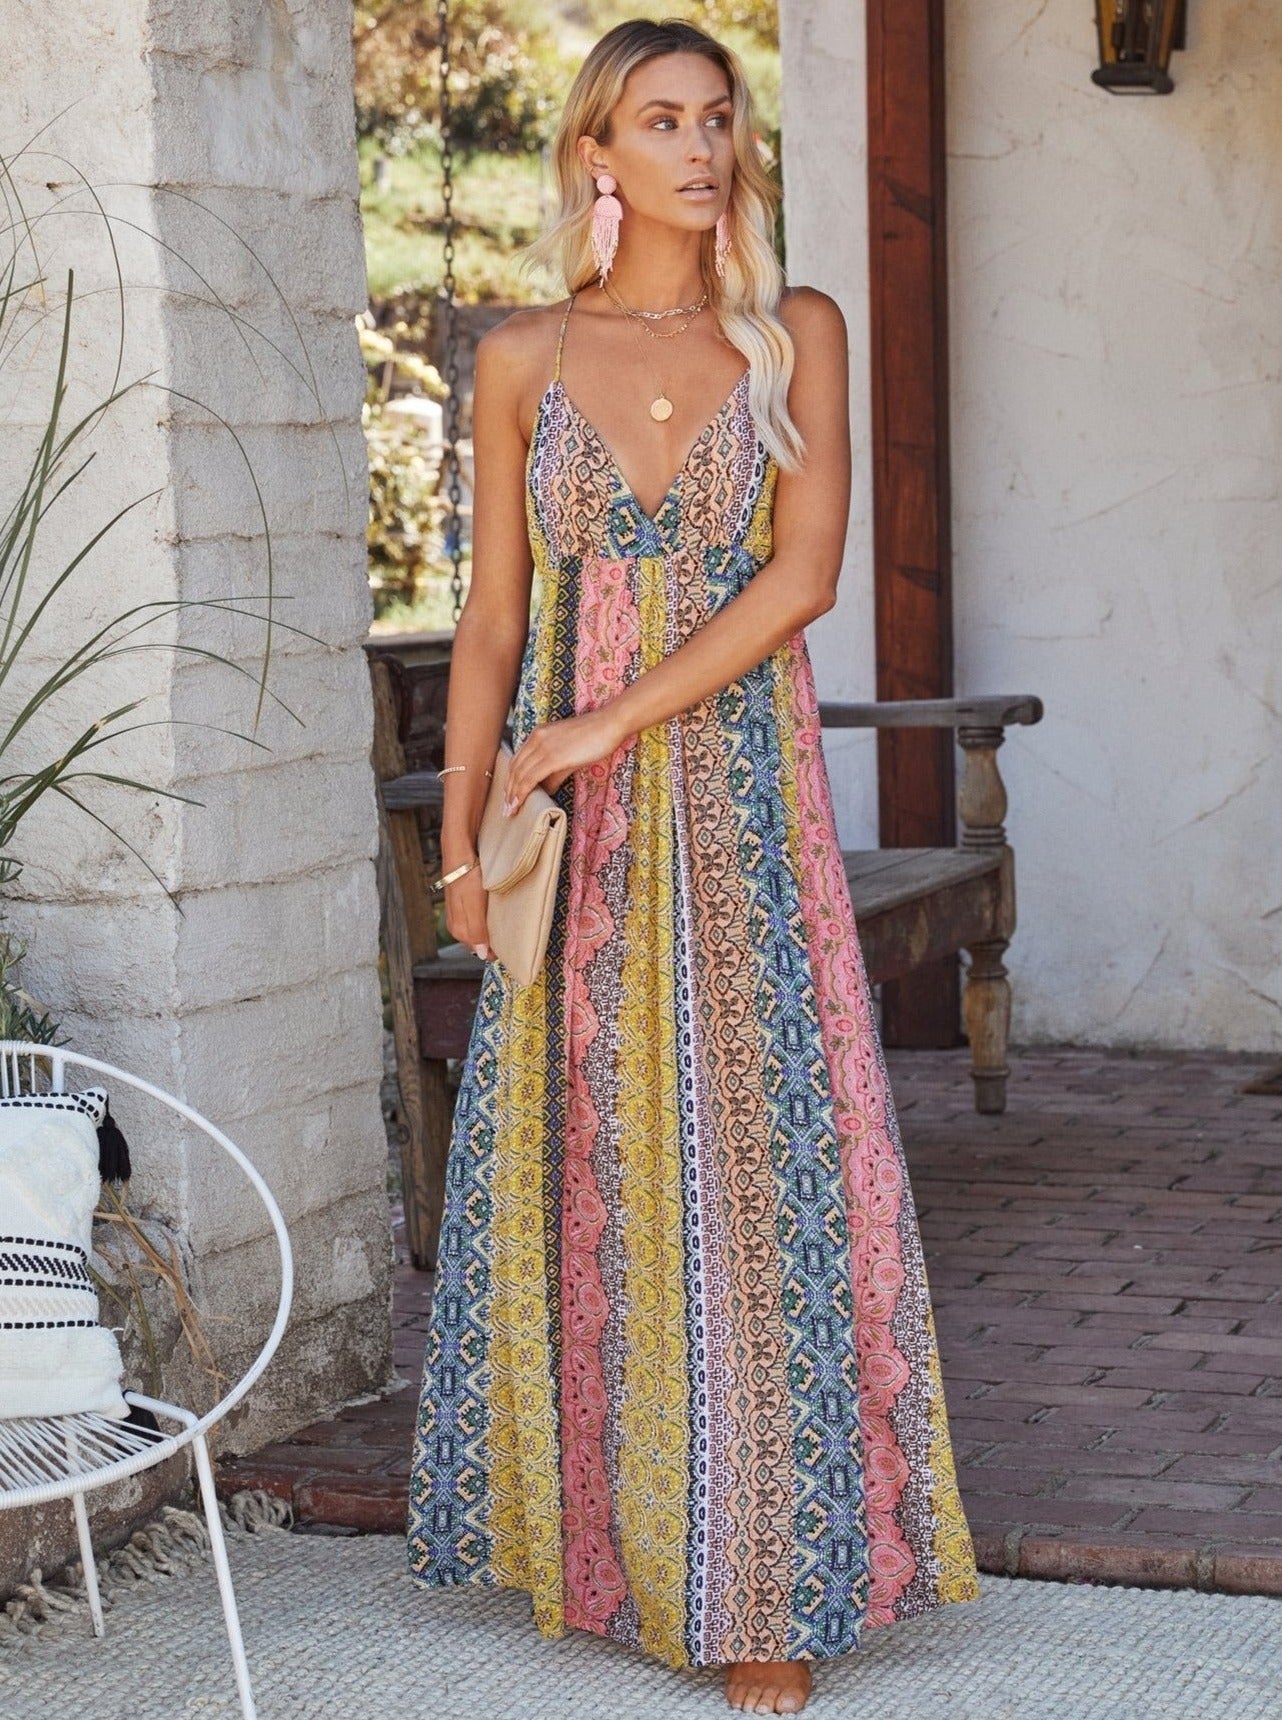 Ärmelloses Kleid im Bohemian-Stil mit rustikalem Aufdruck 